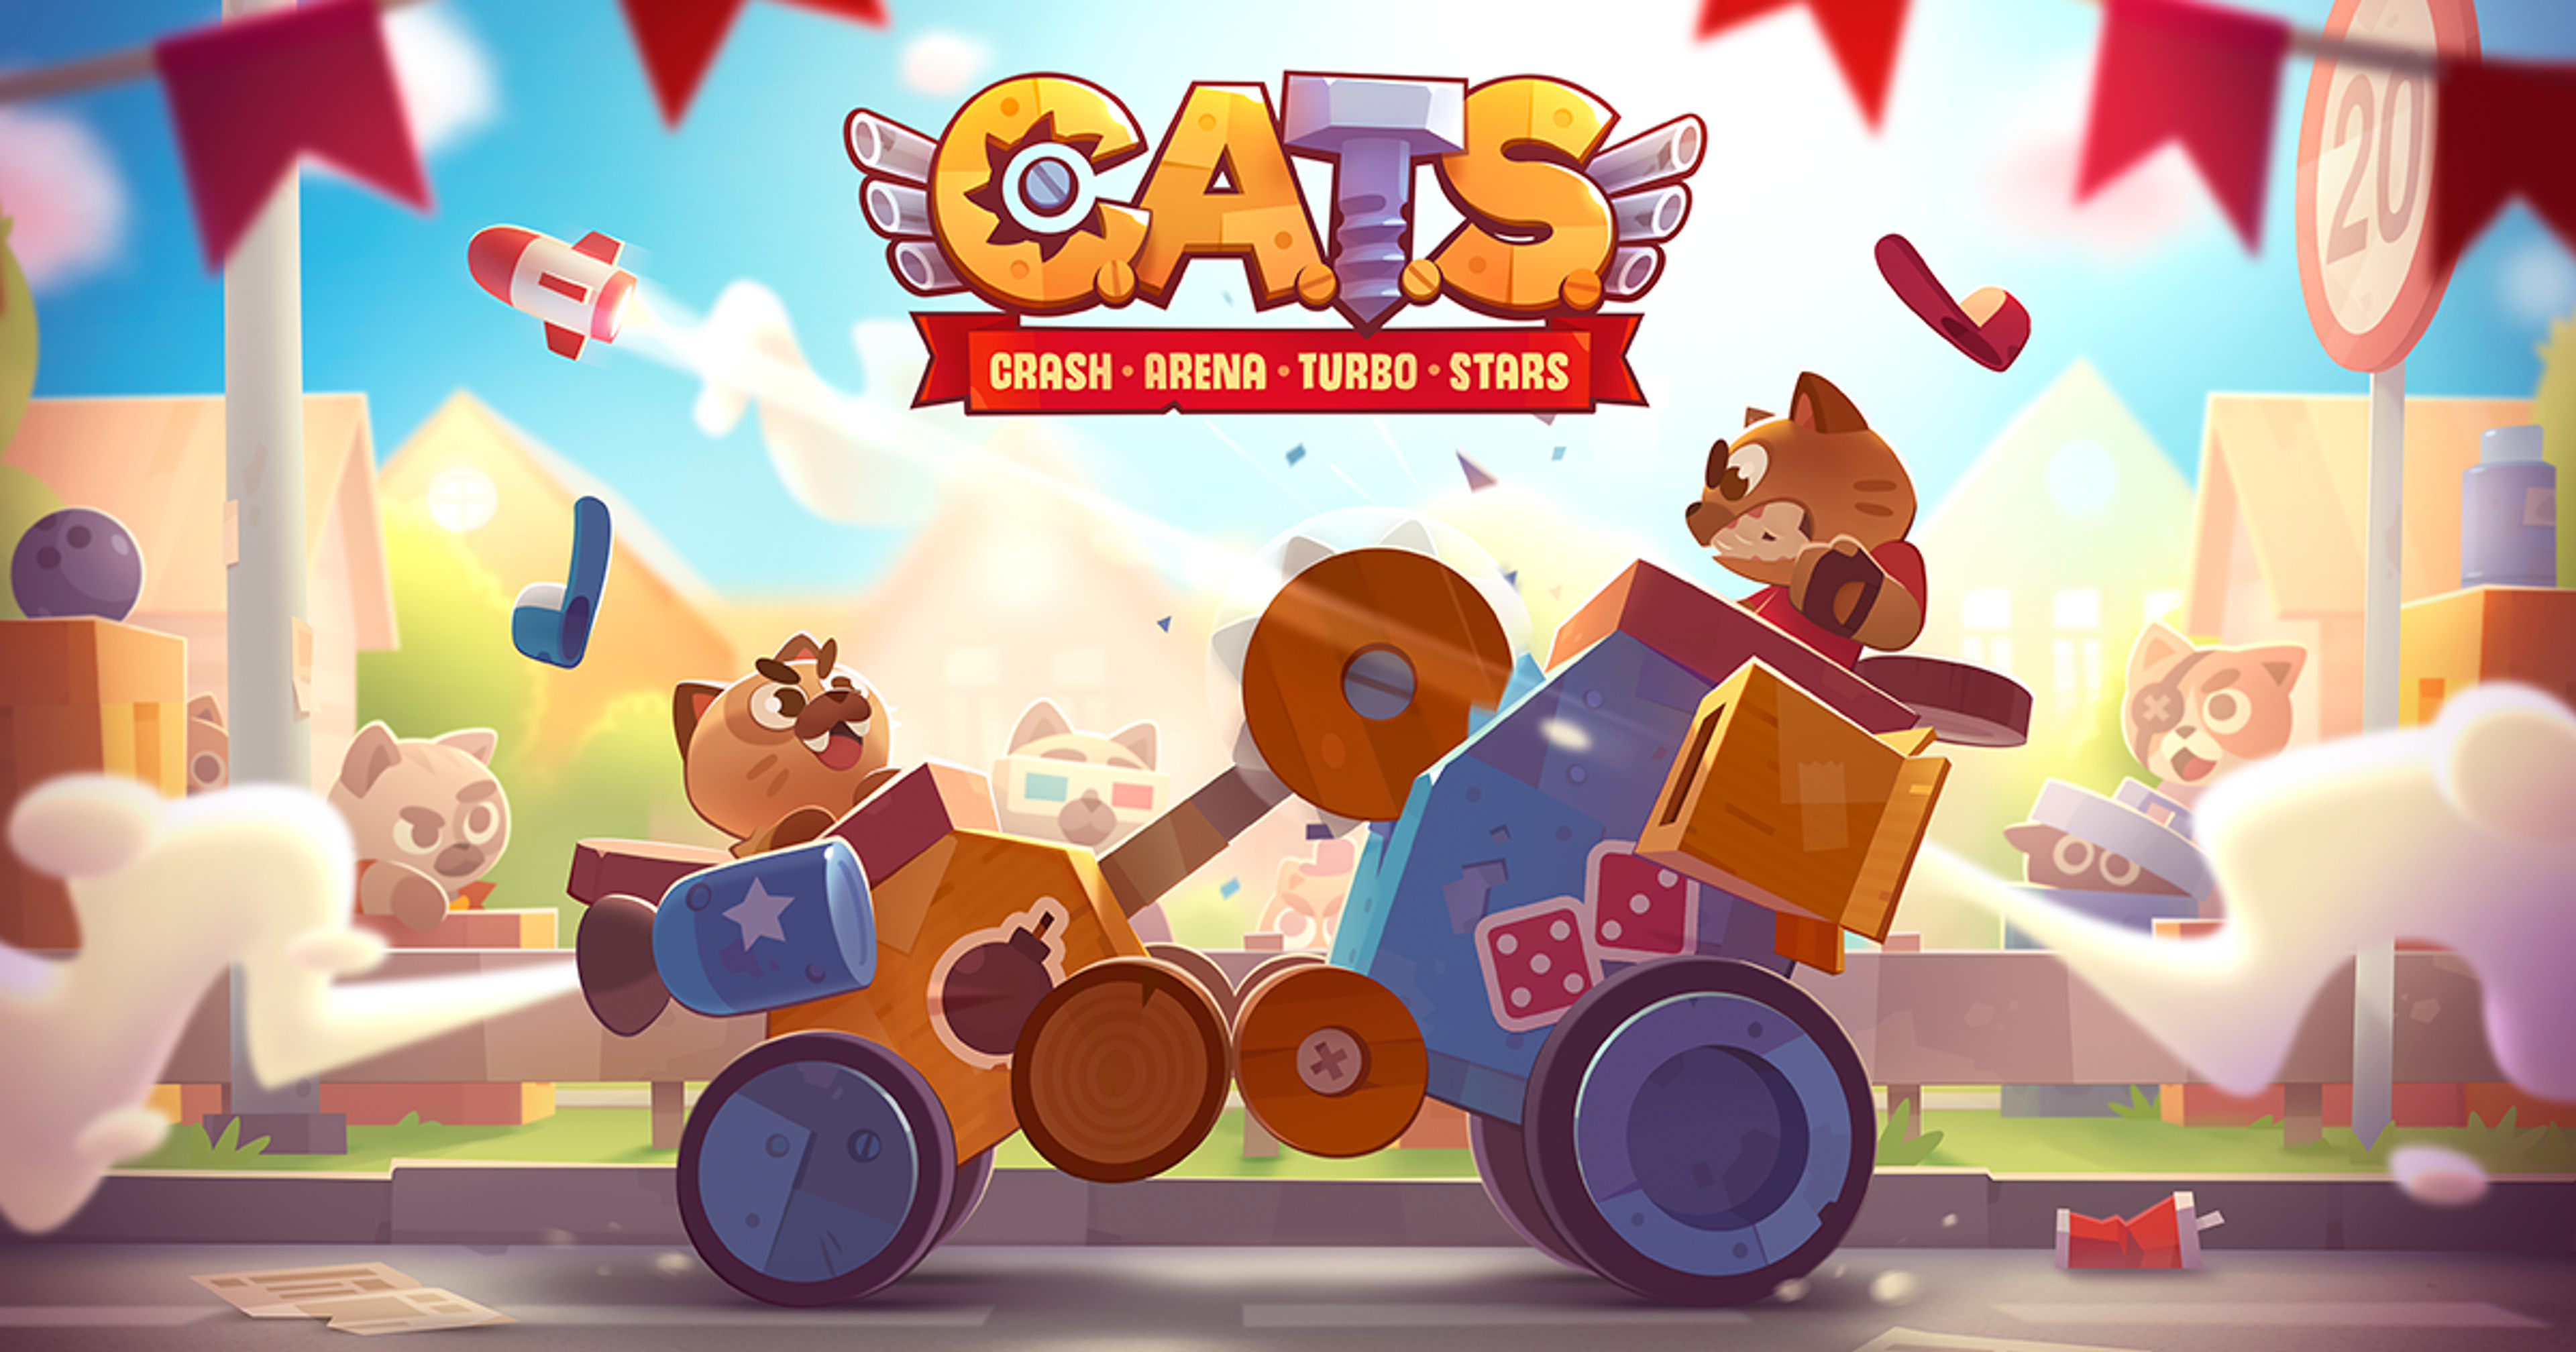 CATS: Crash Arena Turbo Stars screenshot 1